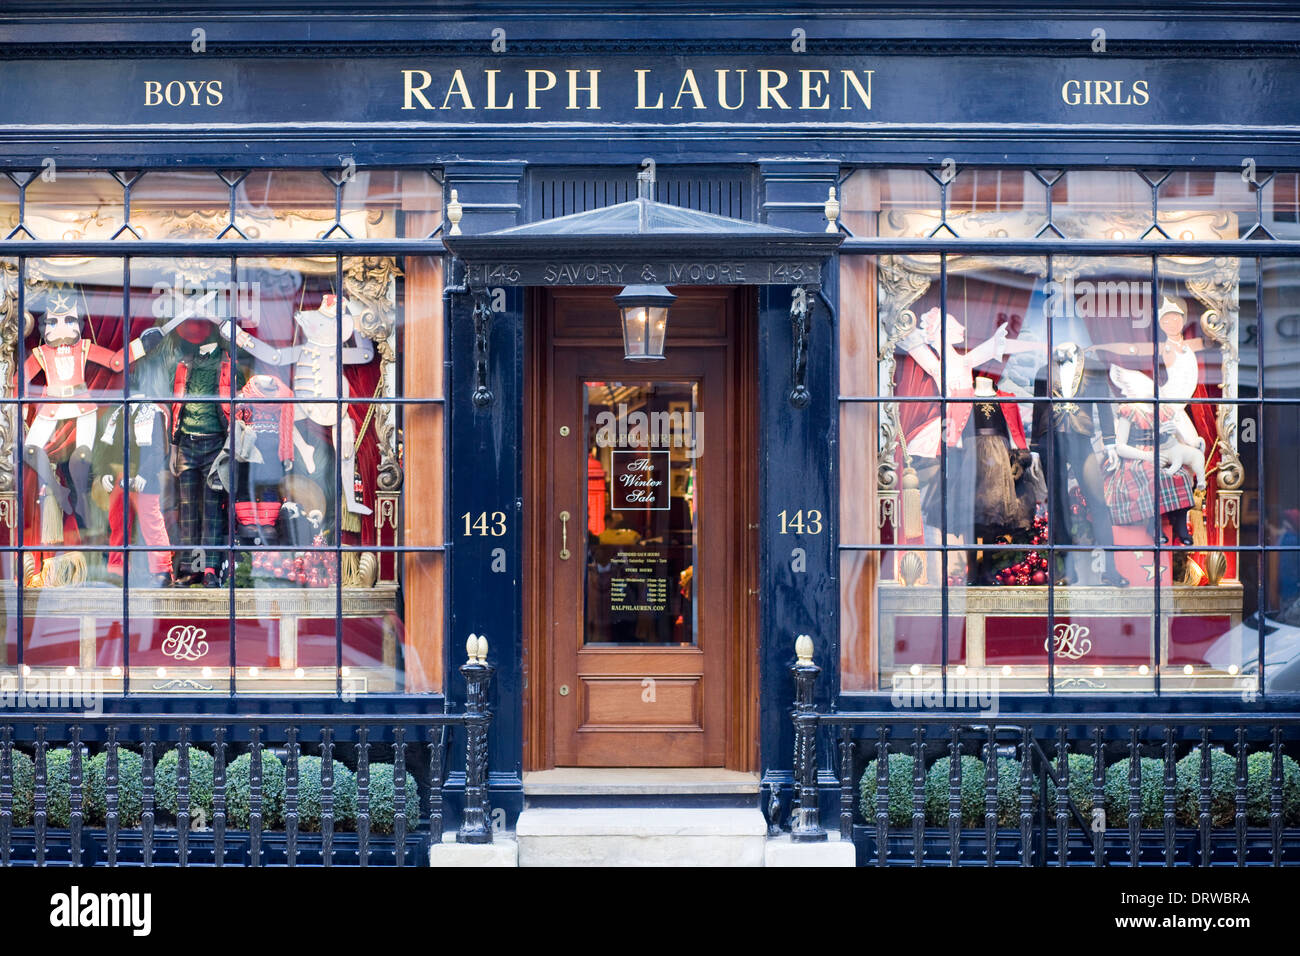 Ralph Lauren Children's Store New Bond Street London Stock Photo - Alamy